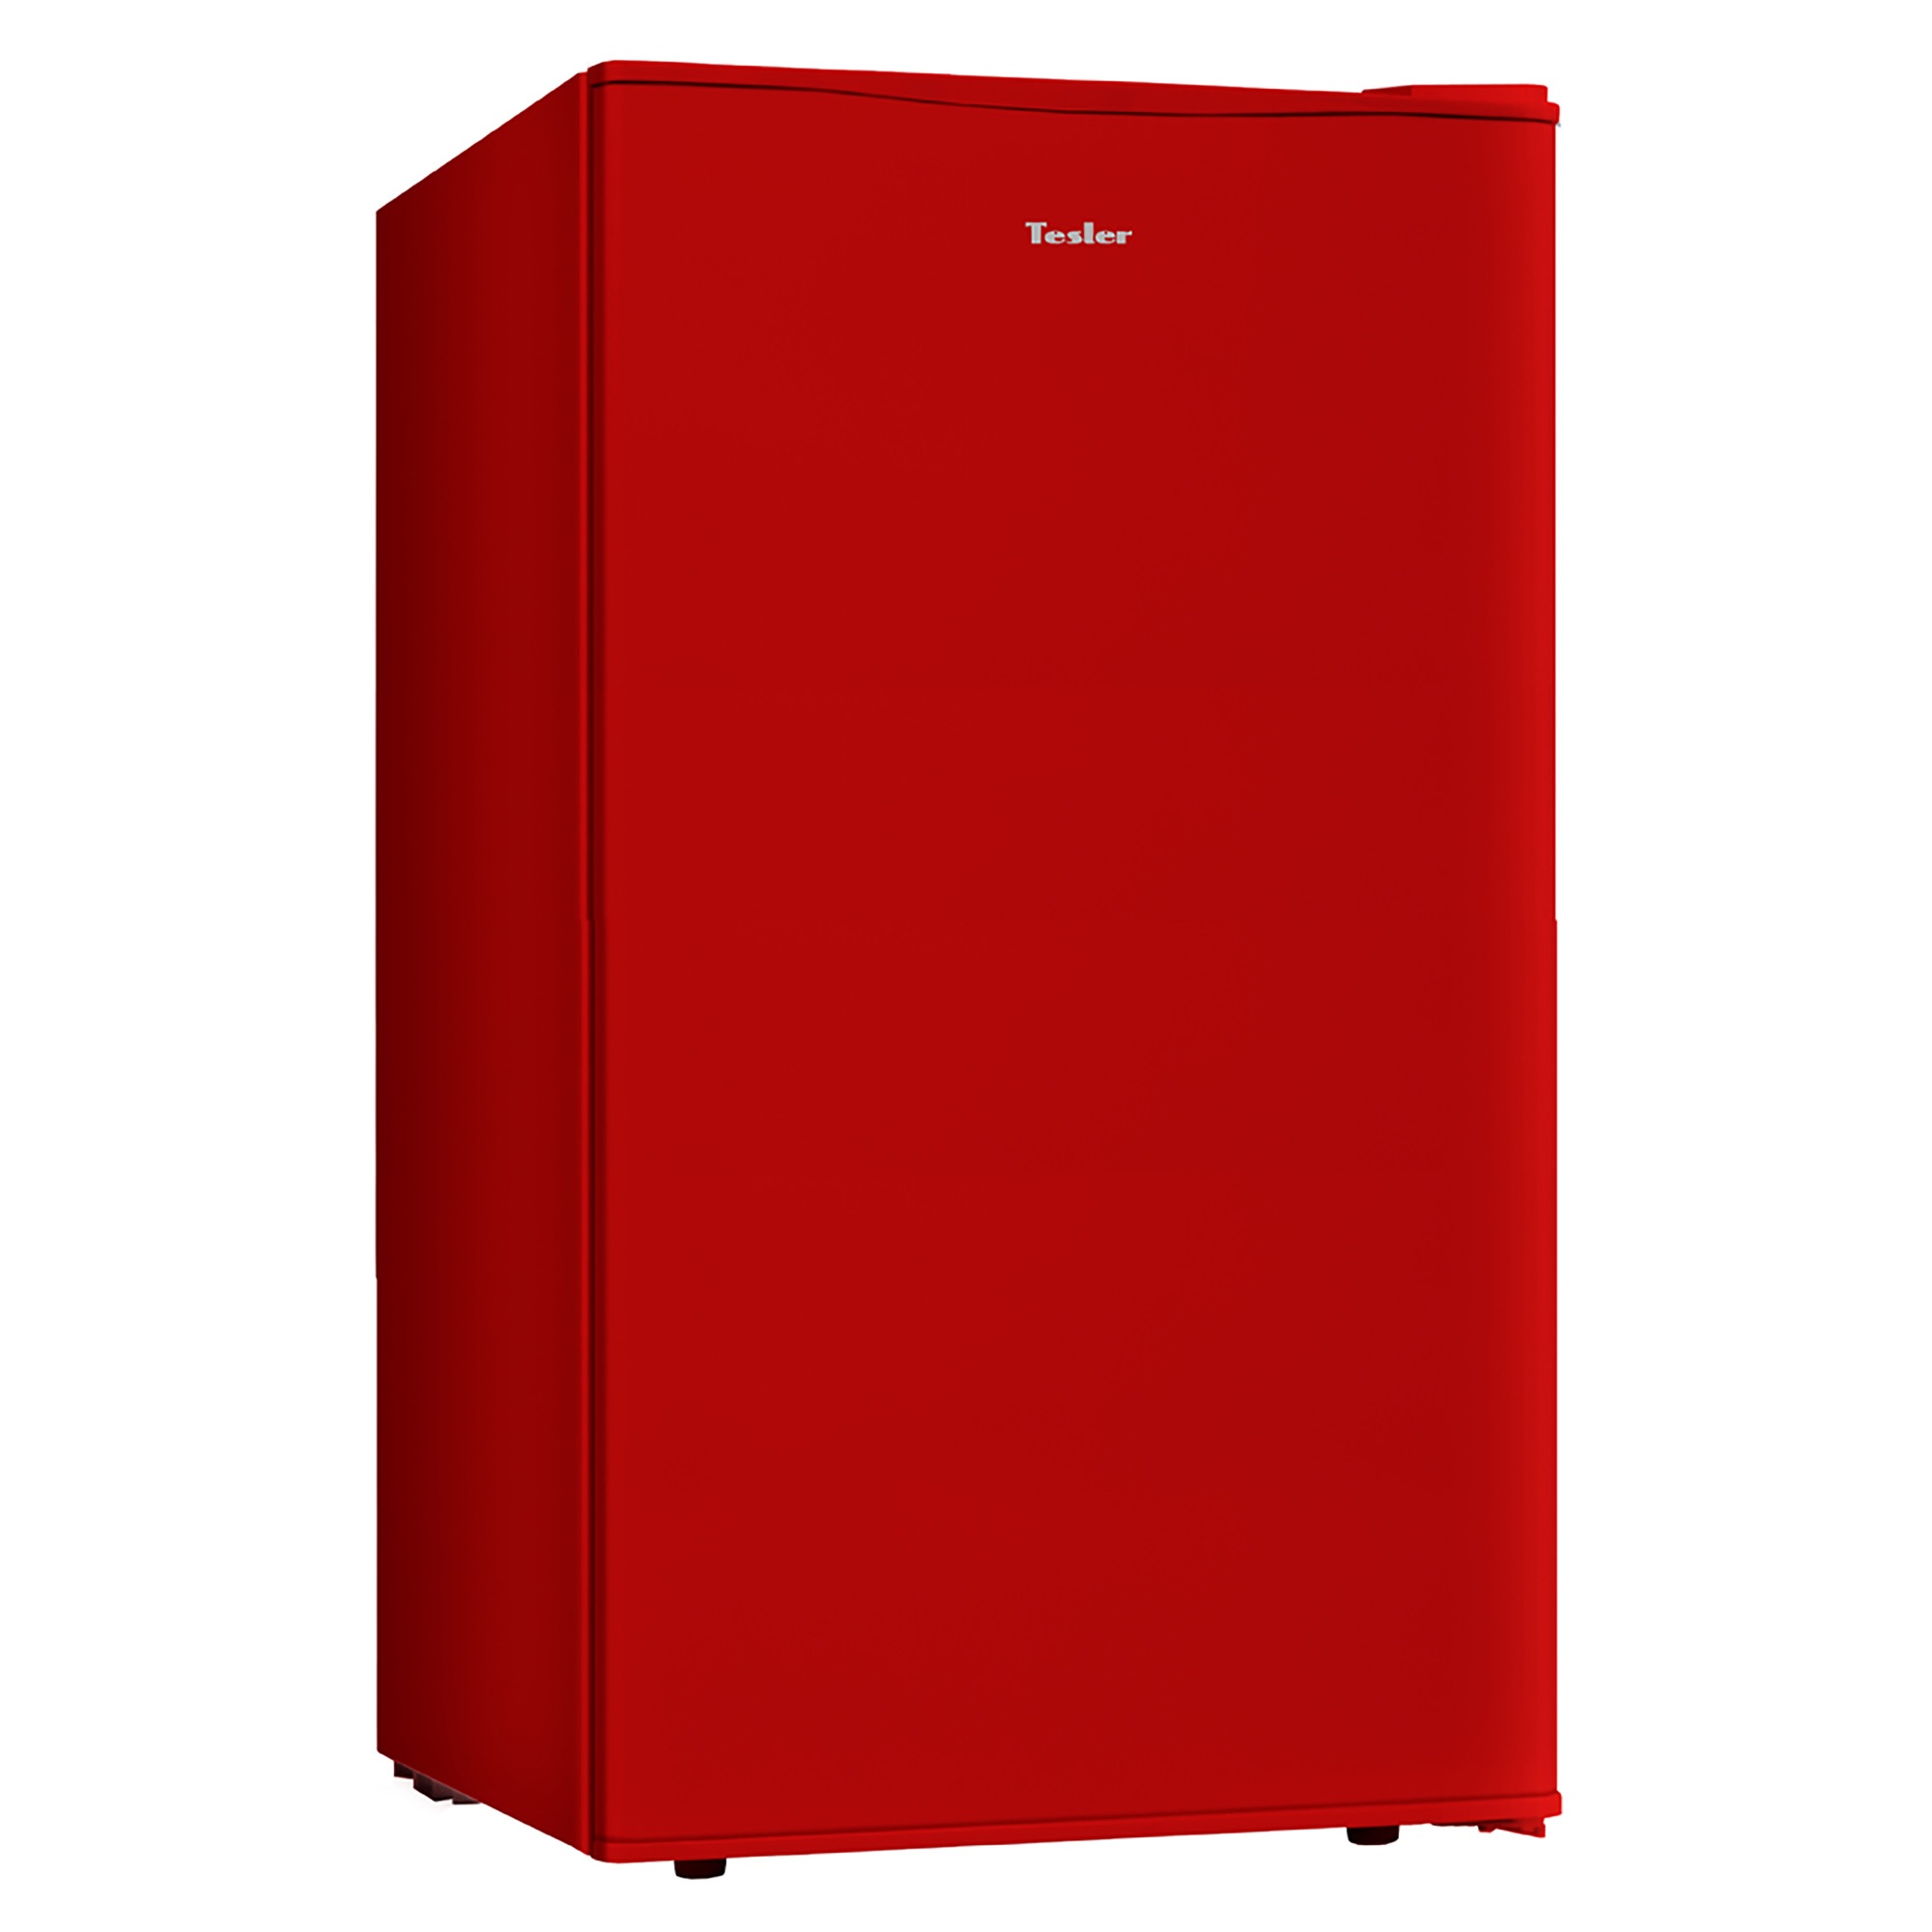 Холодильник TESLER RC-95 красный холодильник tesler rc 95 красный